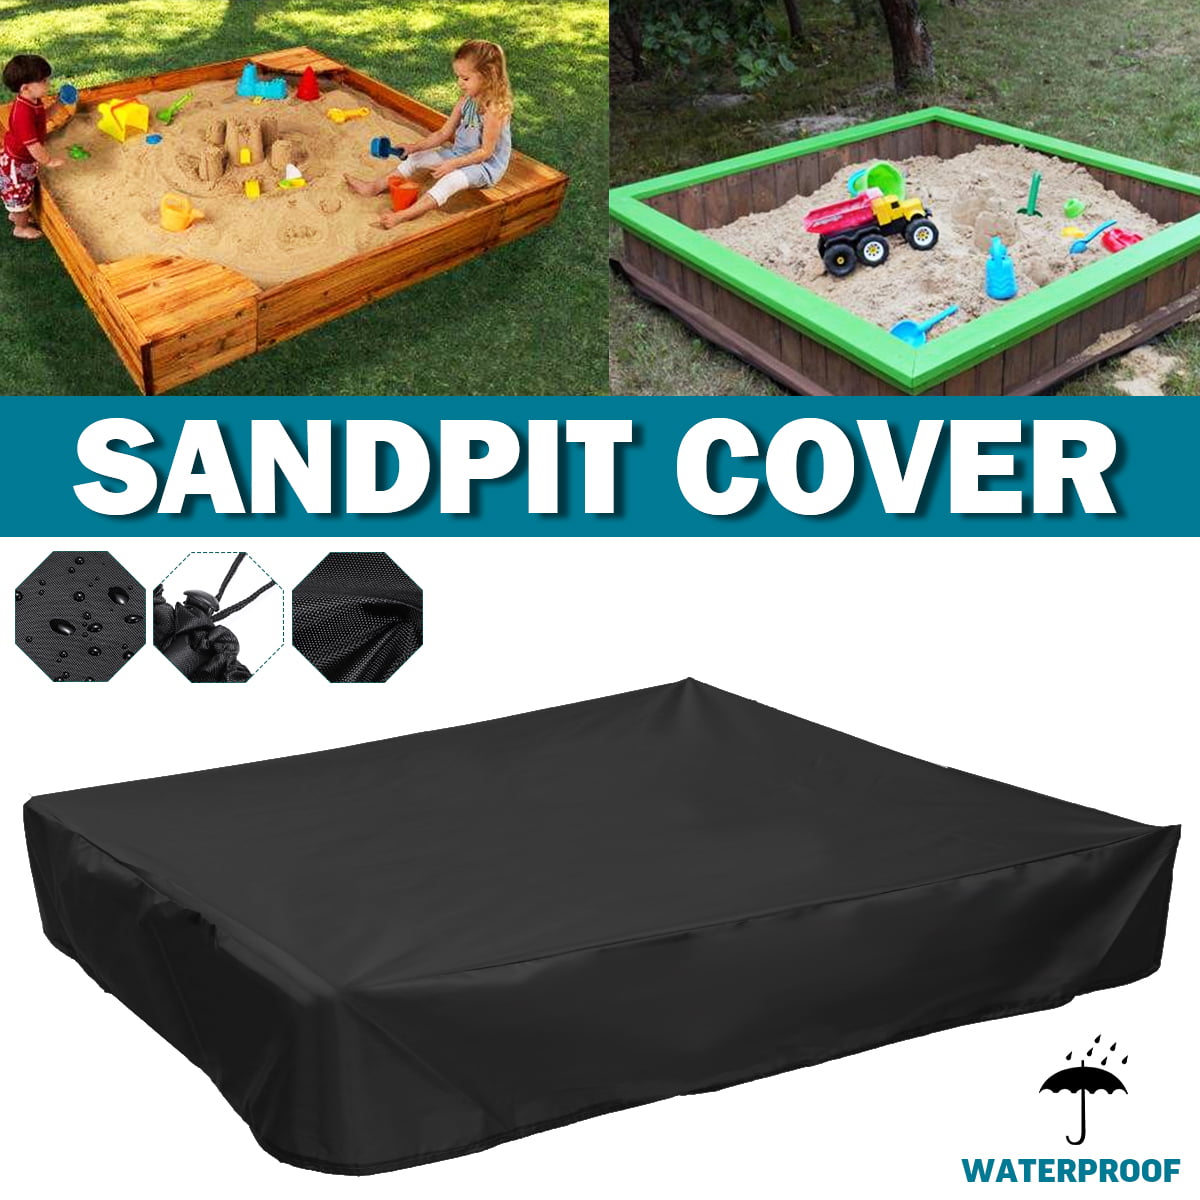 Dustproof Sandbox Cover Sandpit Waterproof Dust Rain Cover Drawstring Outdoor 